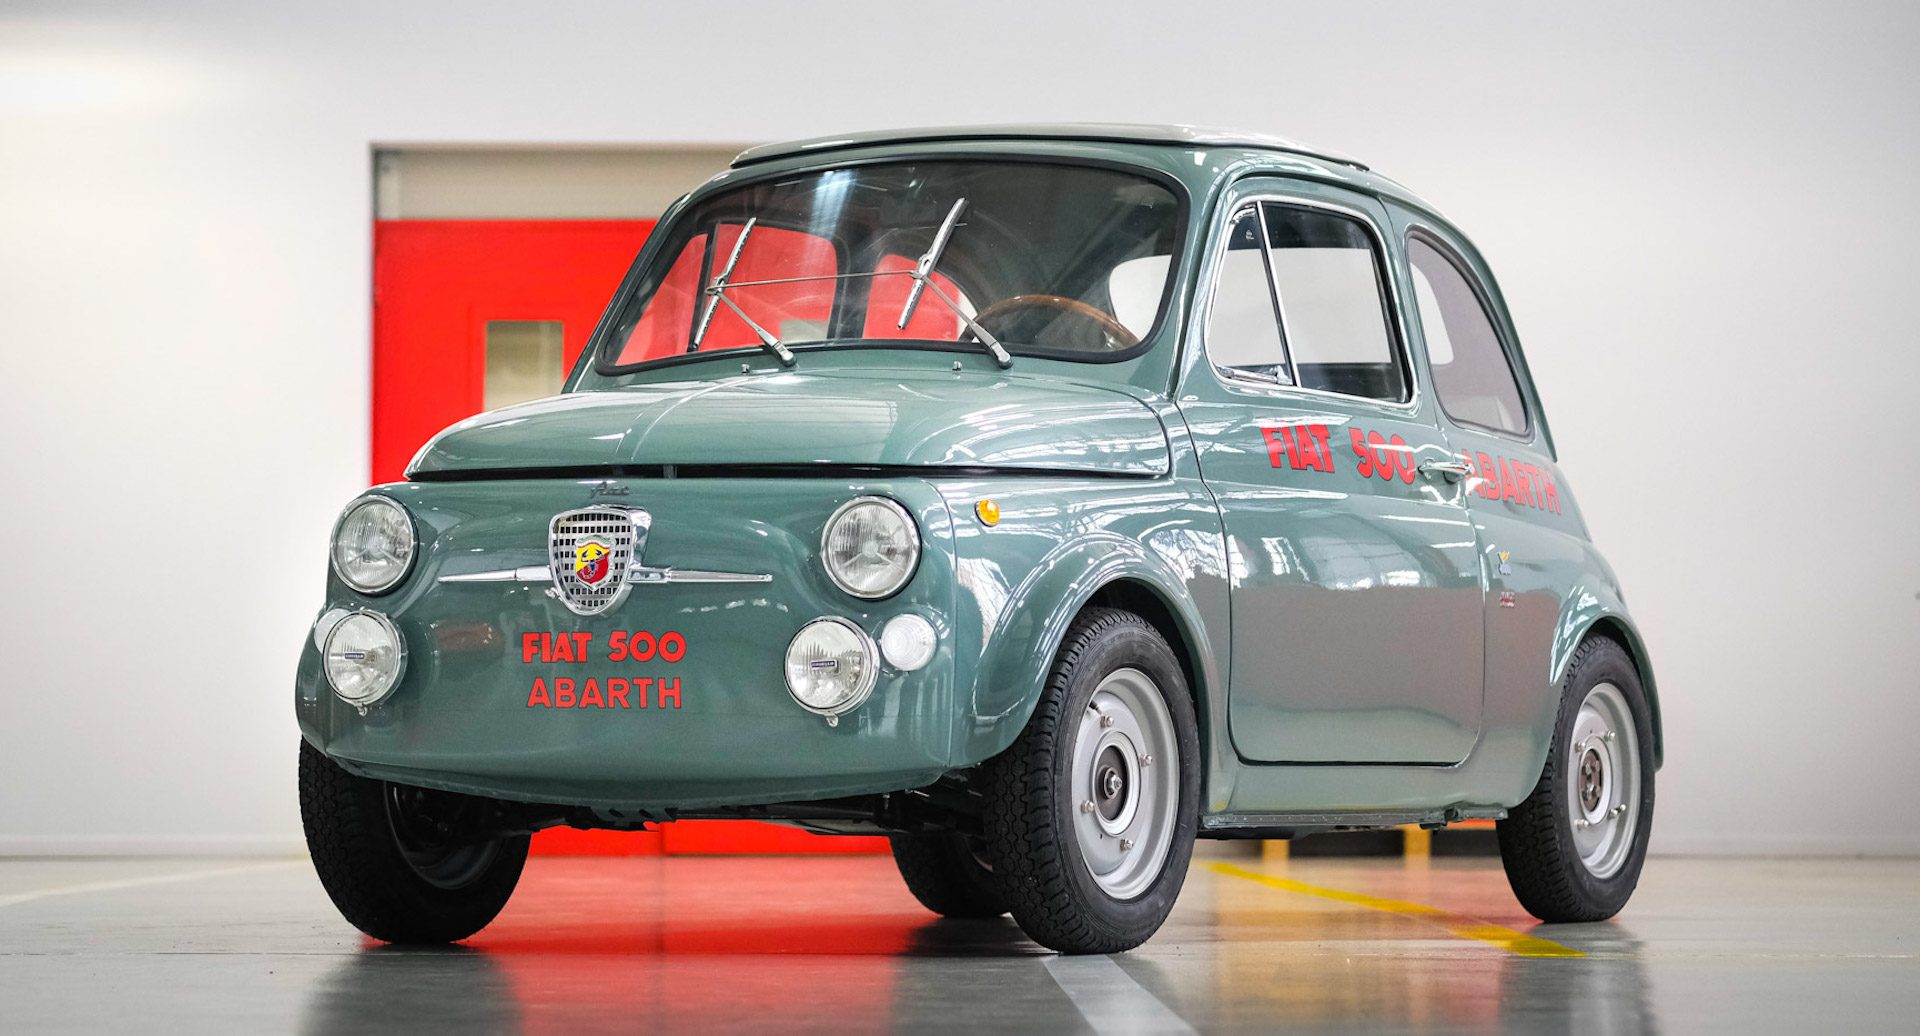 Game Card: 9/a - I - Moretti: Fiat 500 Elektra (Quartett - Cars(D - FXS -  Prototypen Best.-Nr. 539 22) Col:D-FXS-53922.9a